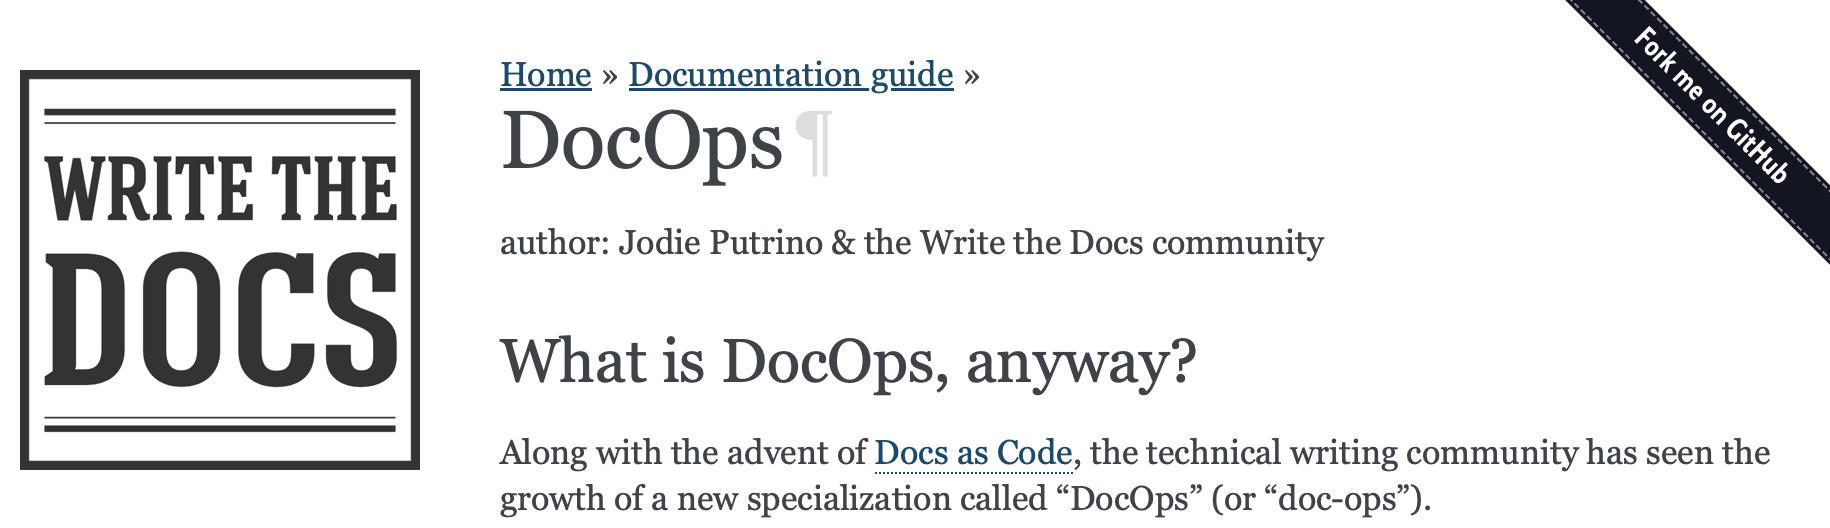 Write the Docs - DocOps